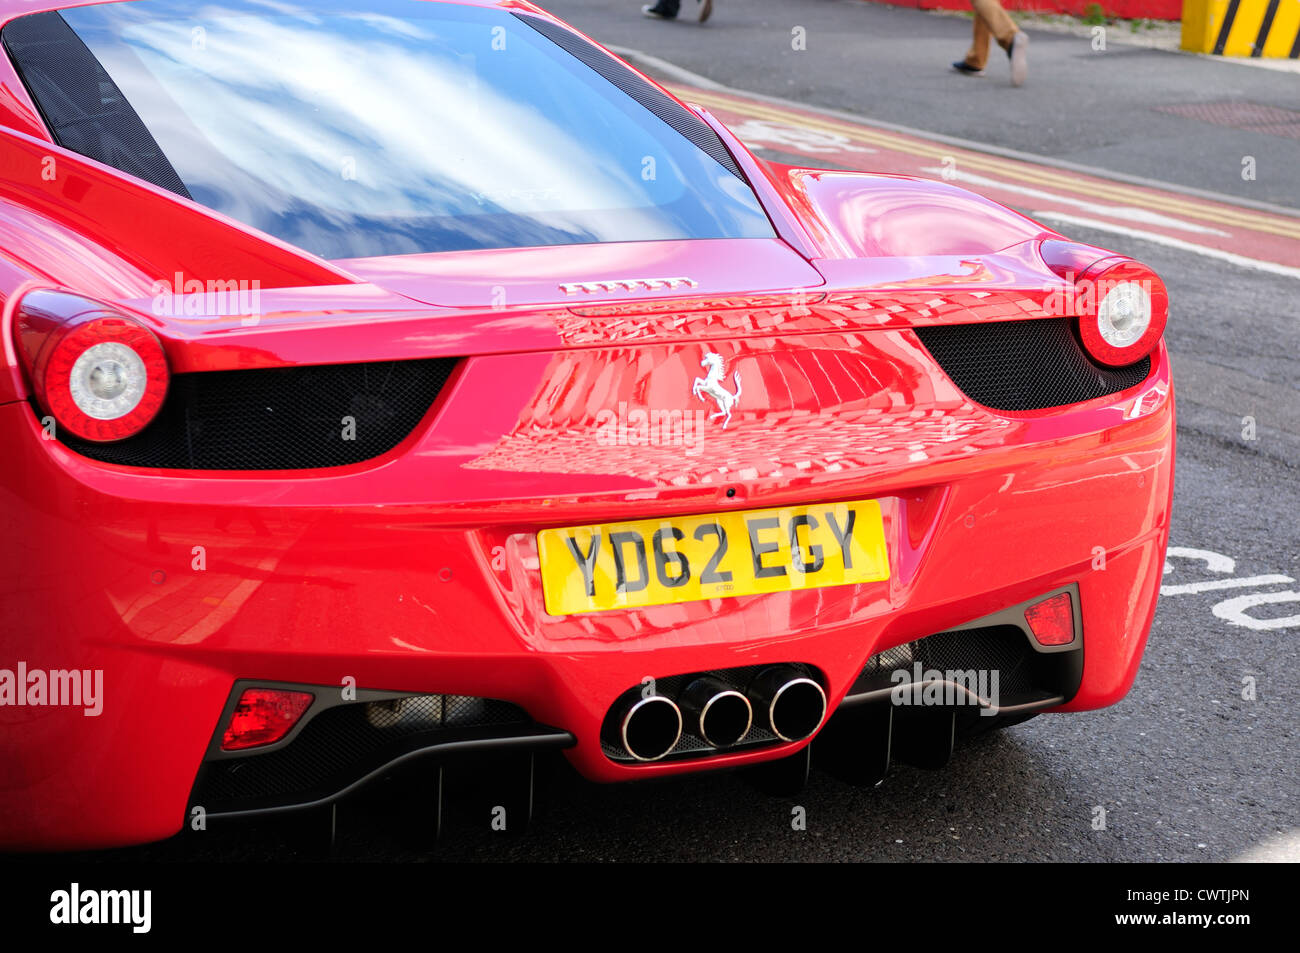 Ferrari Sider,2012 Reg. Stock Photo